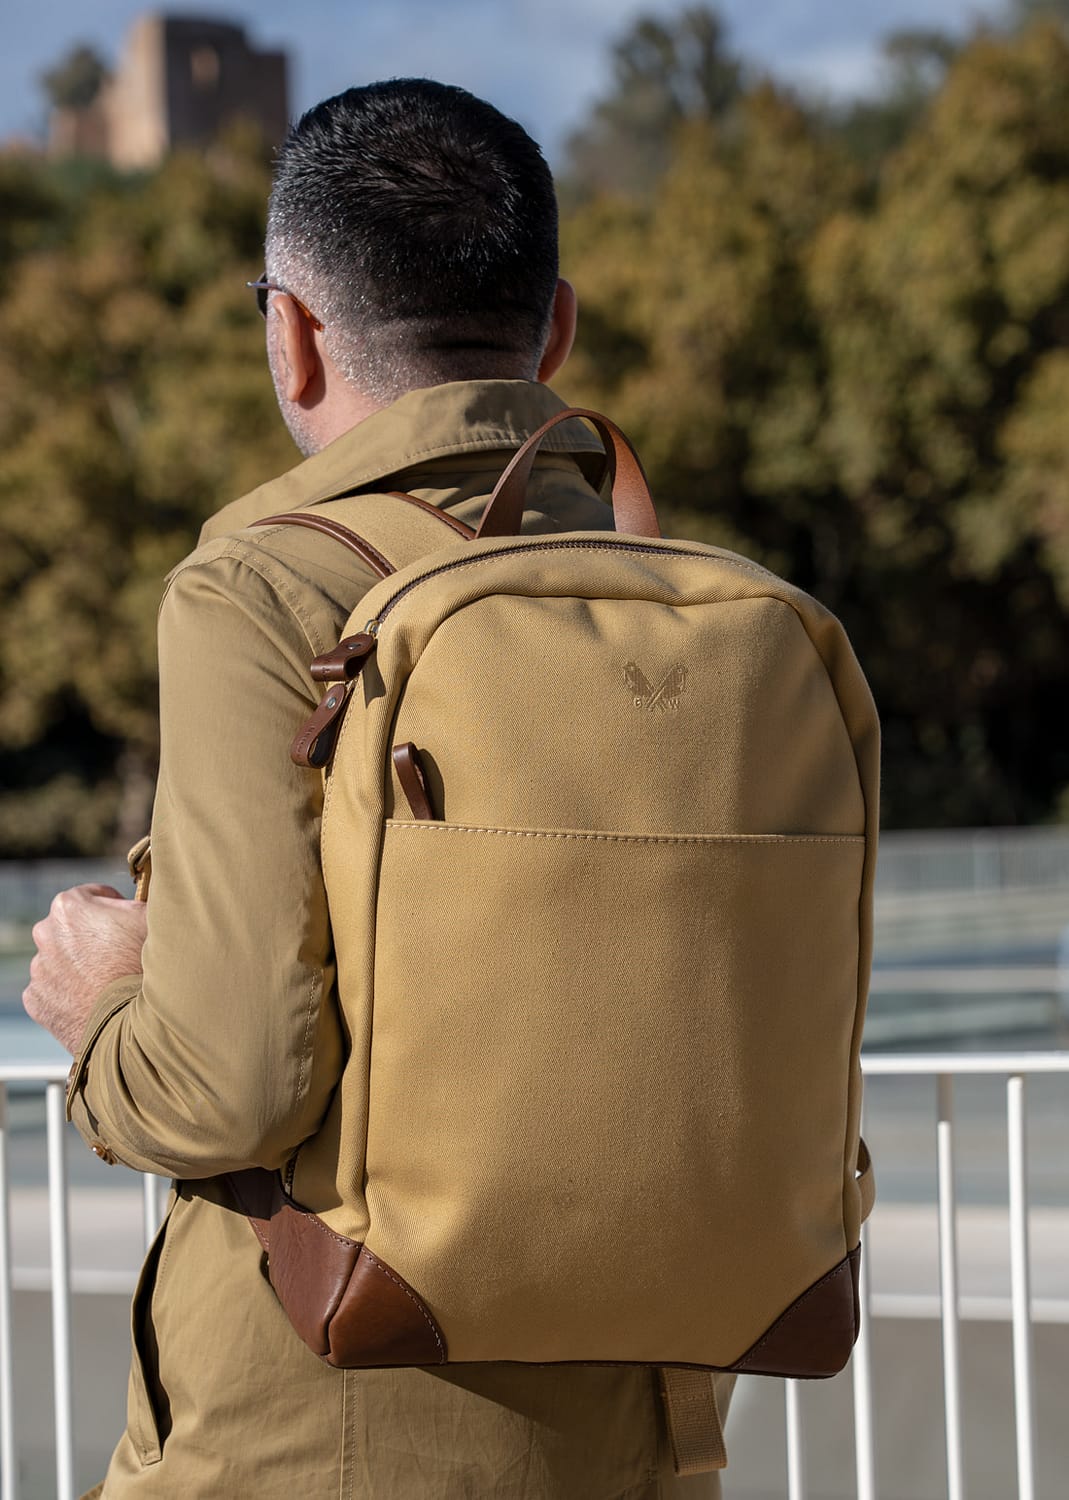 Most stylish backpack